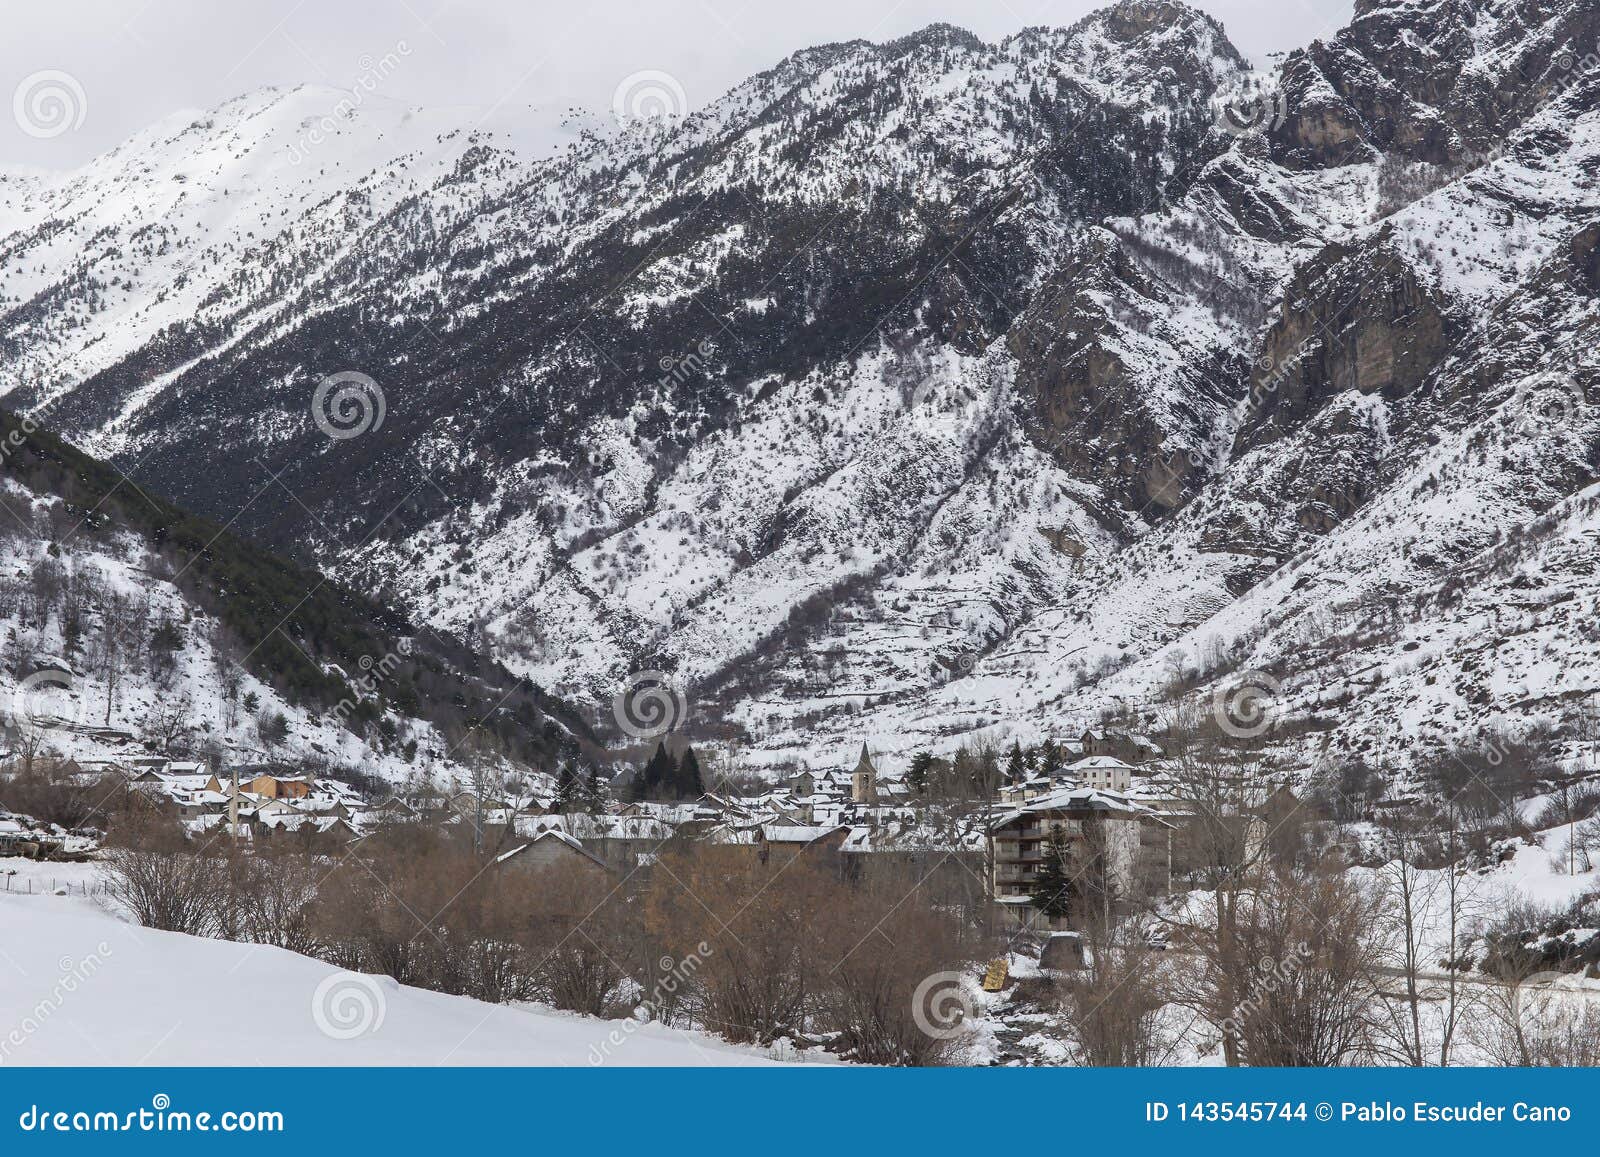 landscape of snowy town of espot in winter.